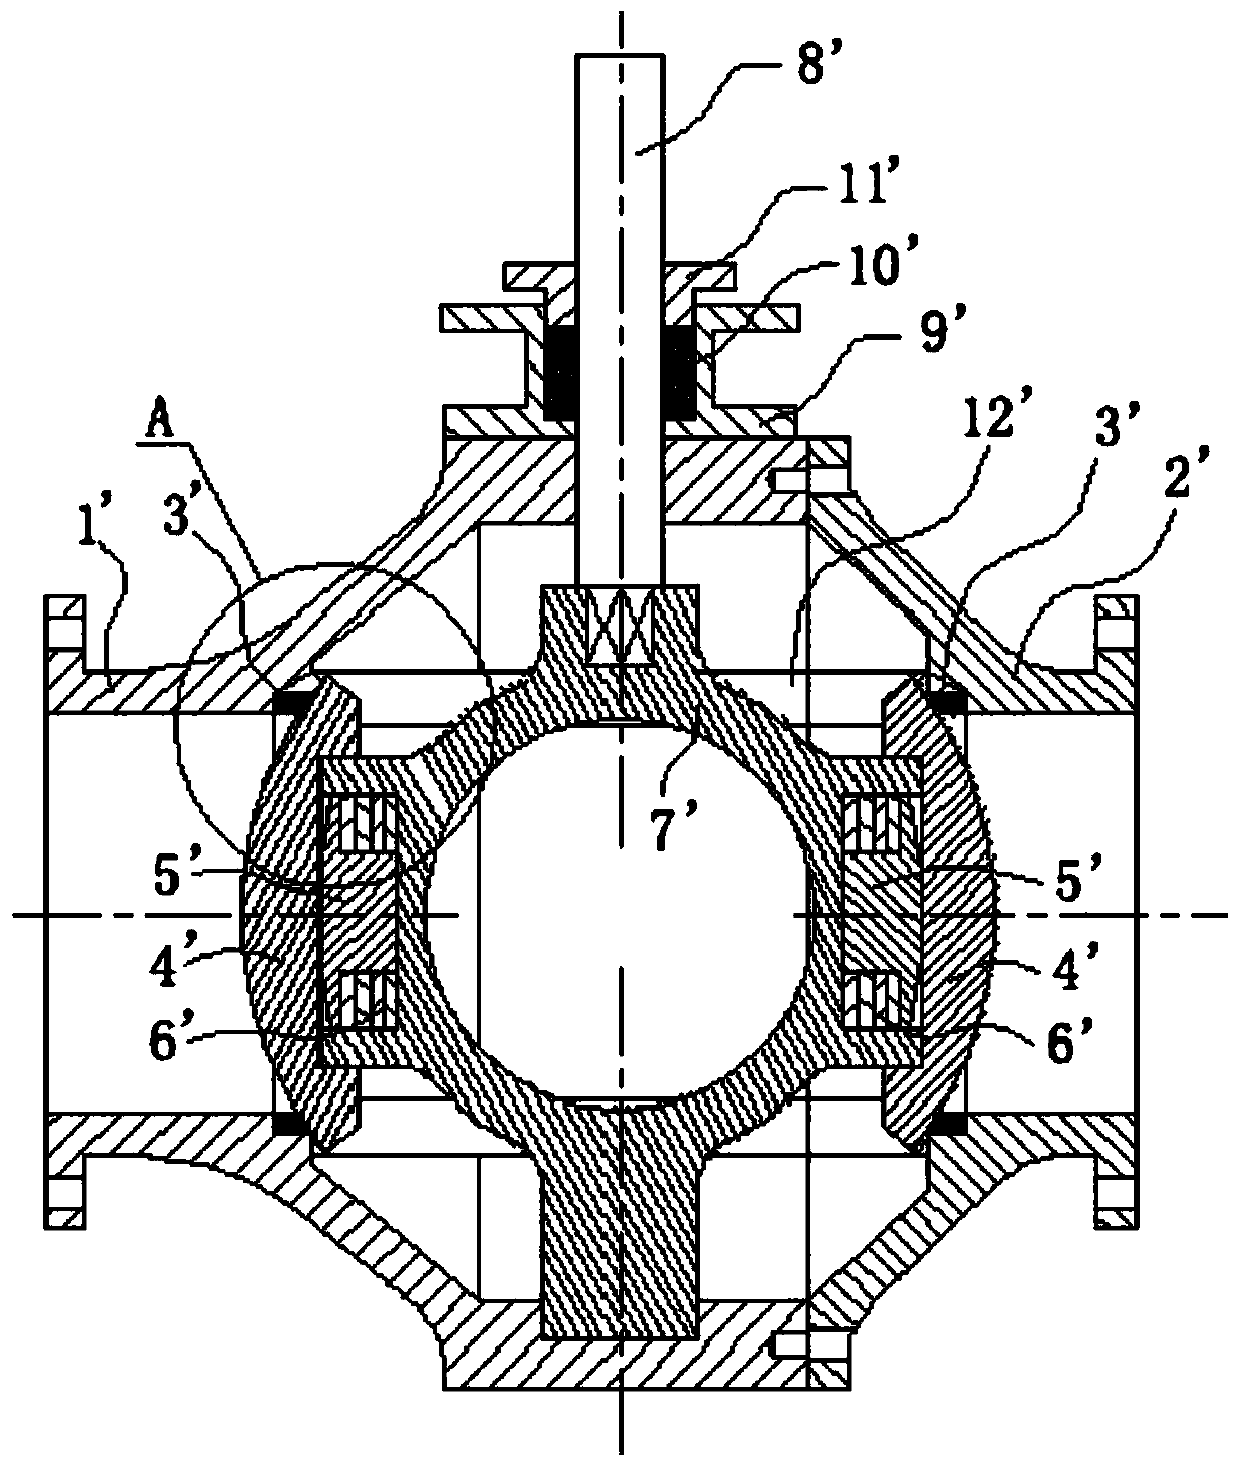 A metal hard-sealed spherical valve